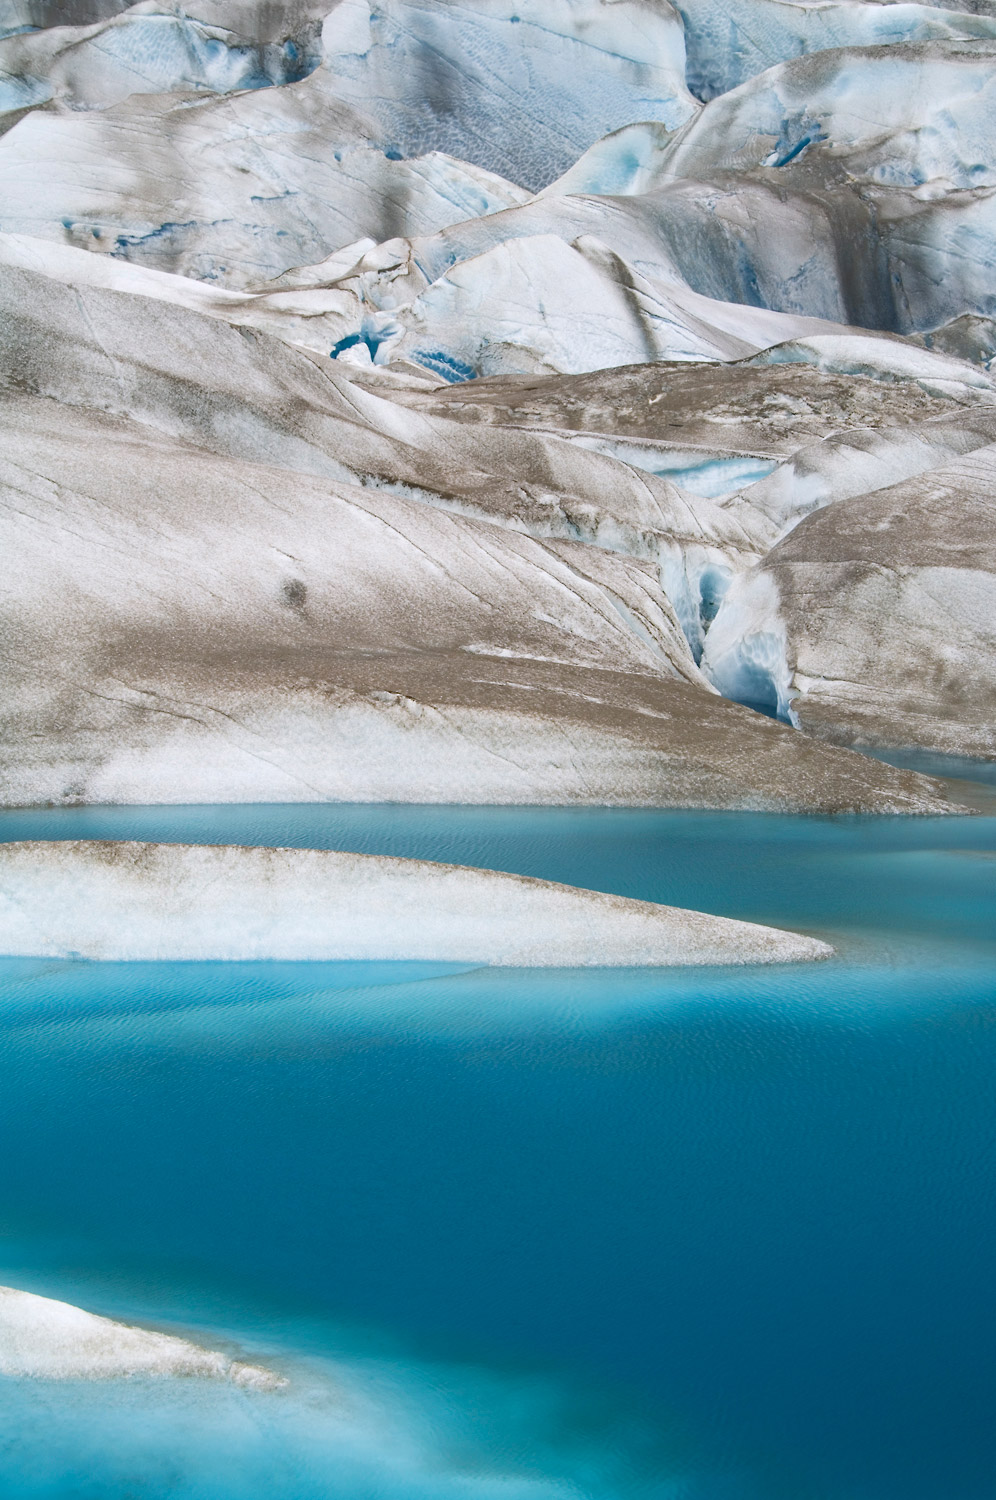 A deep blue tarn, or lake, on Tana Glacier, near Thompson Ridge, Wrangell - St. Elias National Park, Alaska.